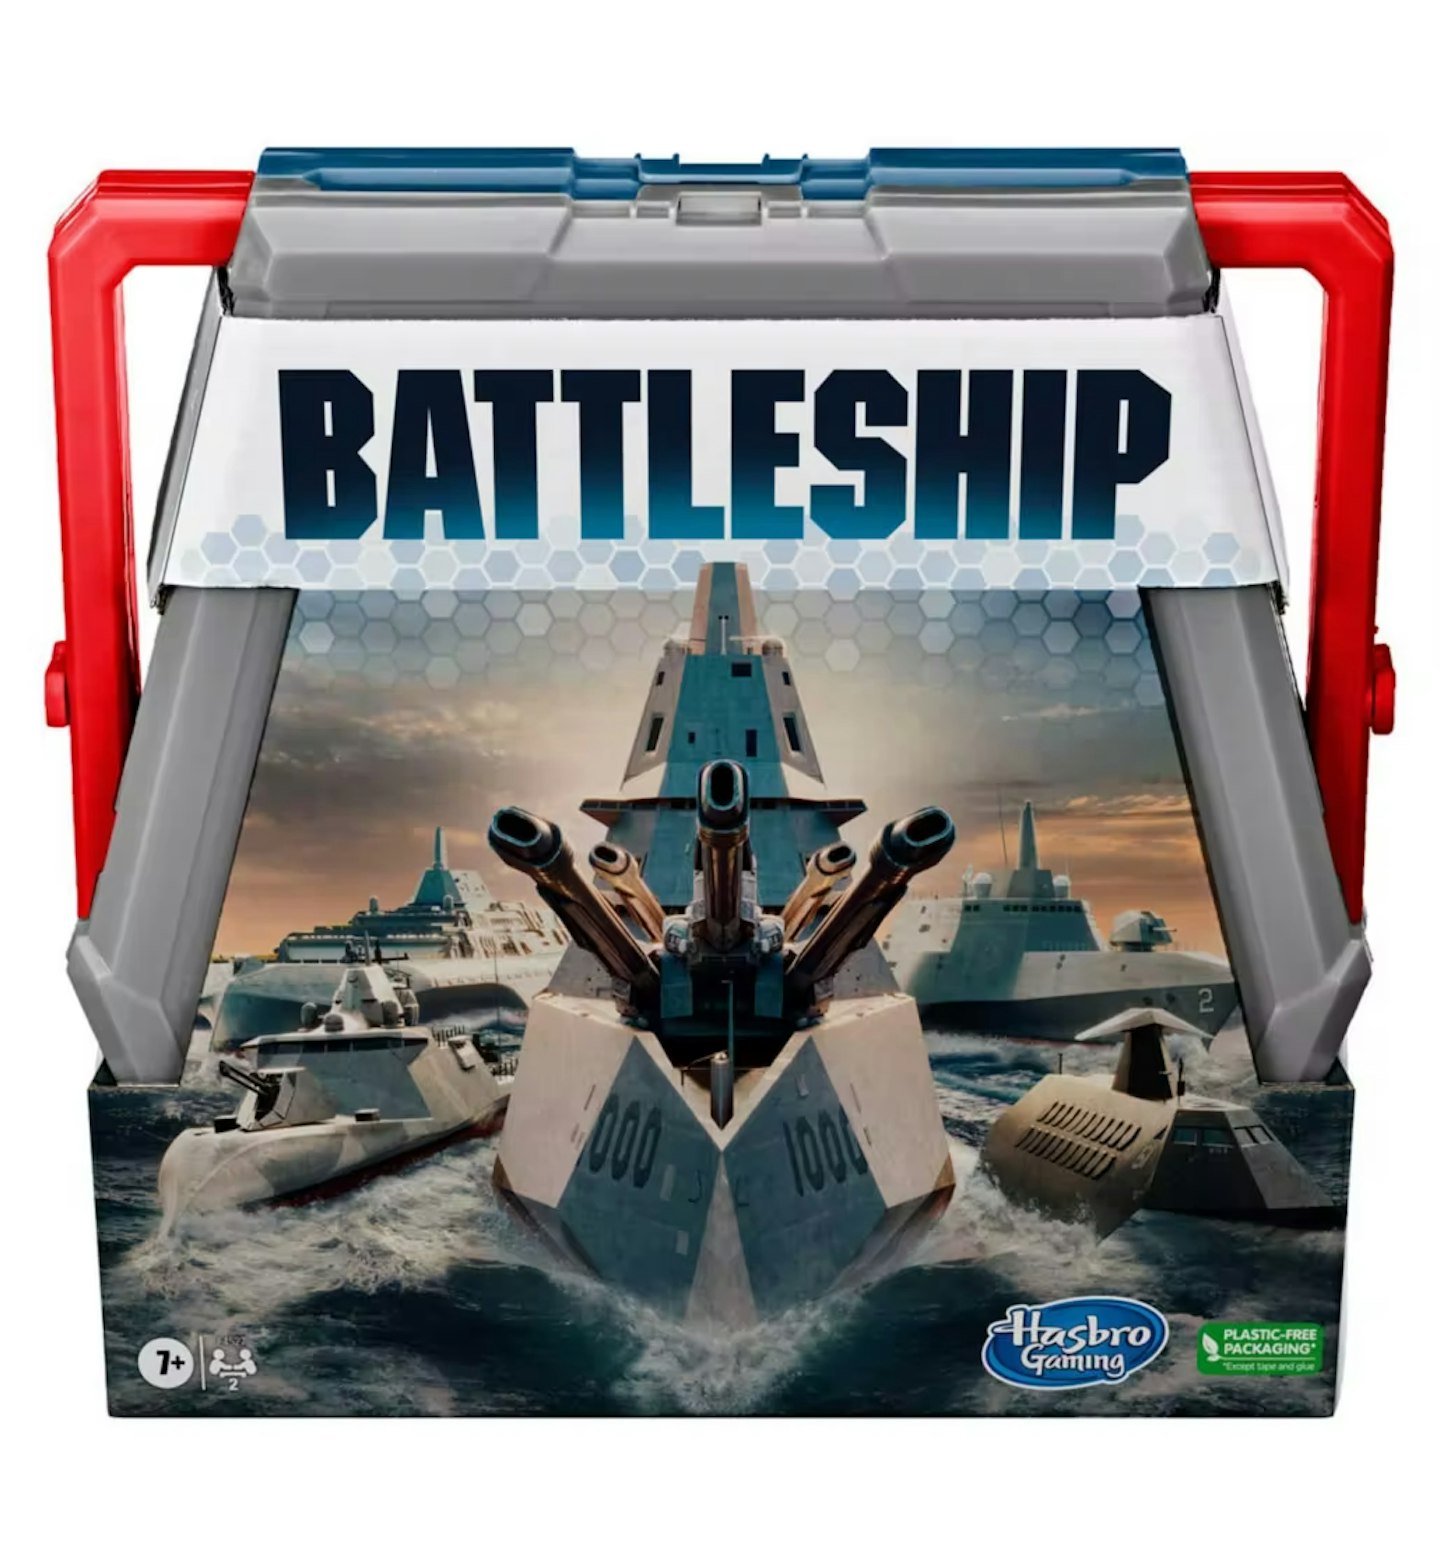 Battleship game box